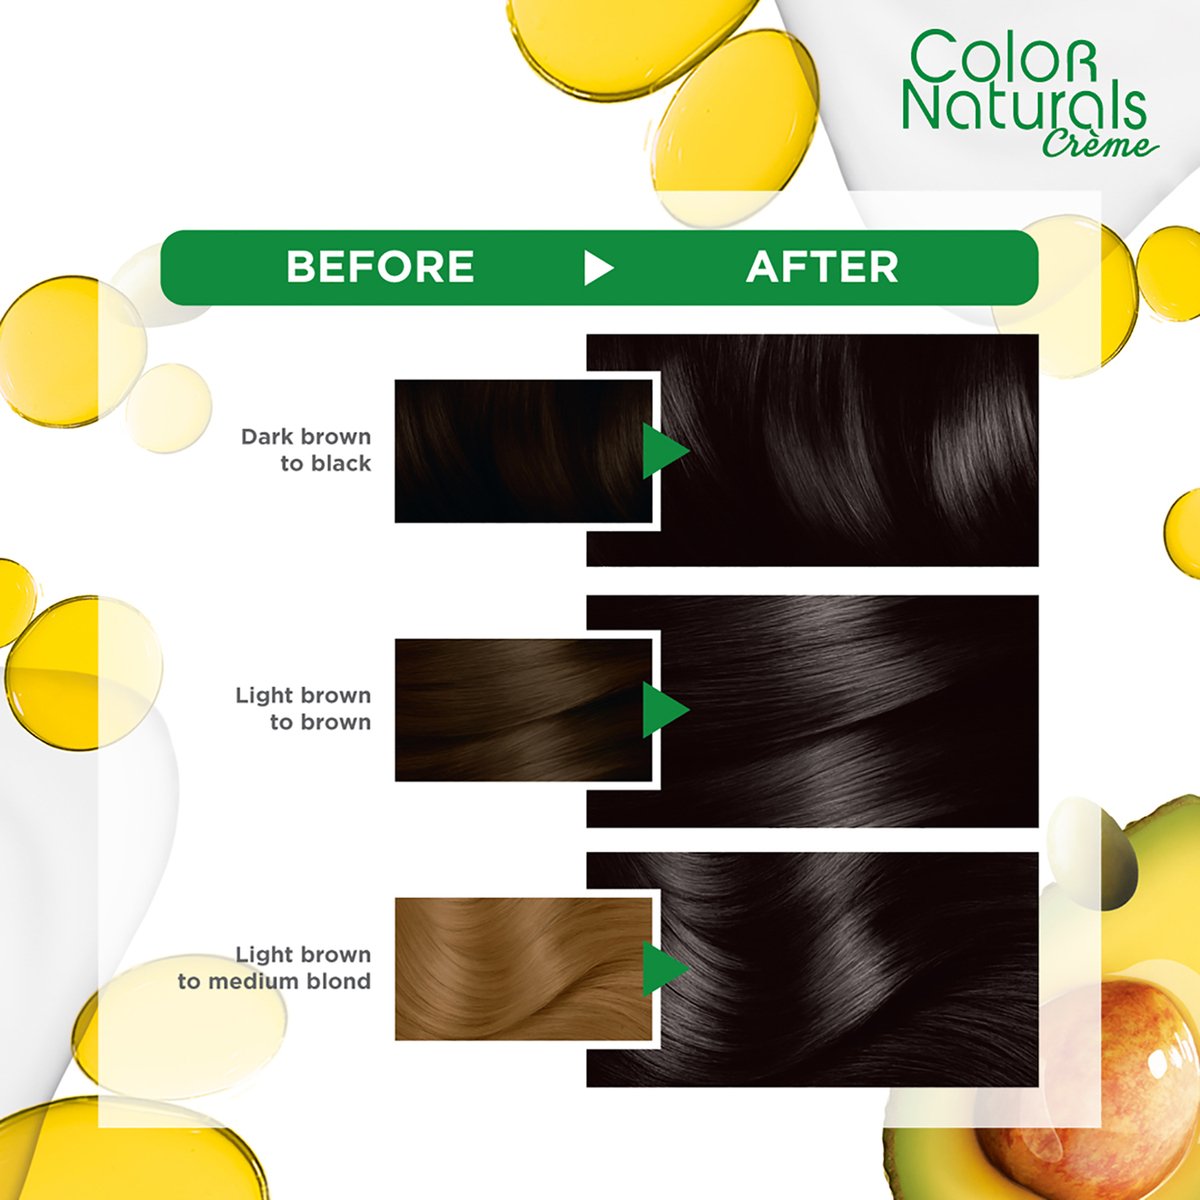 Garnier Color Naturals Crème Nourishing Permanent Hair Color 2.0 Deep Luminous Black 1 pkt